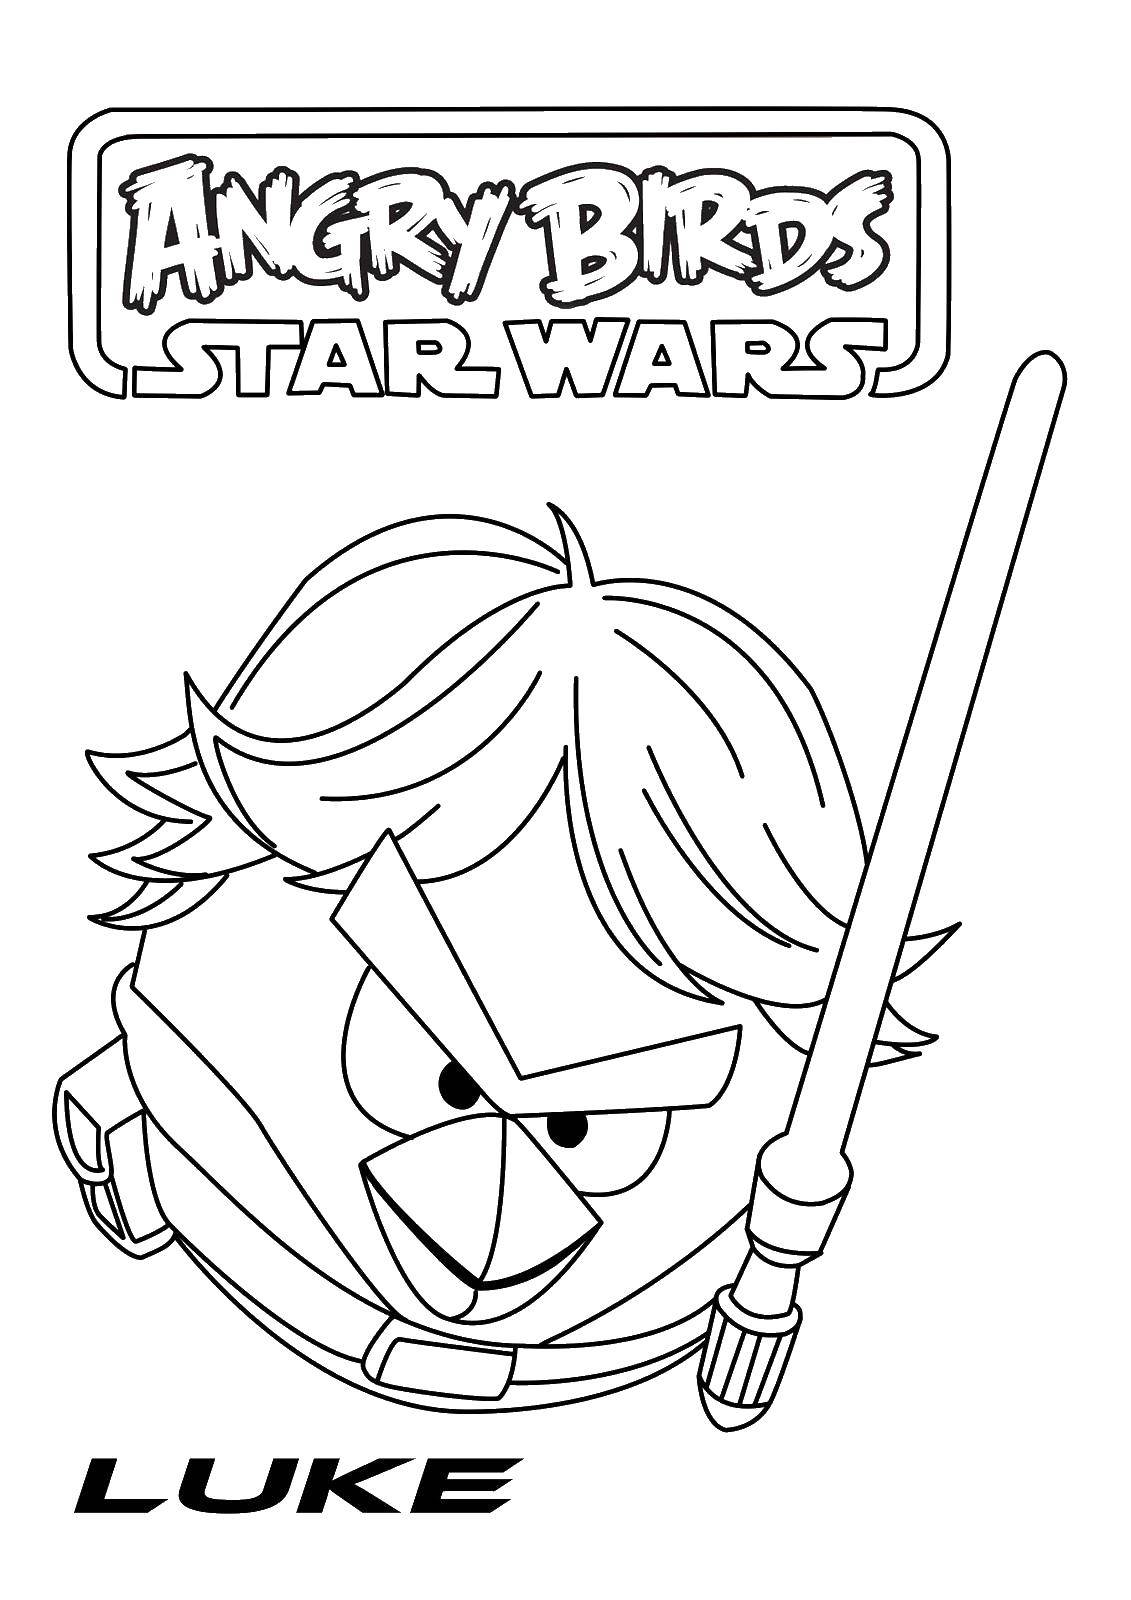 Coloring Angry birds Luke Skywalker. Category angry birds. Tags:  Luke Skywalker, angry birds.